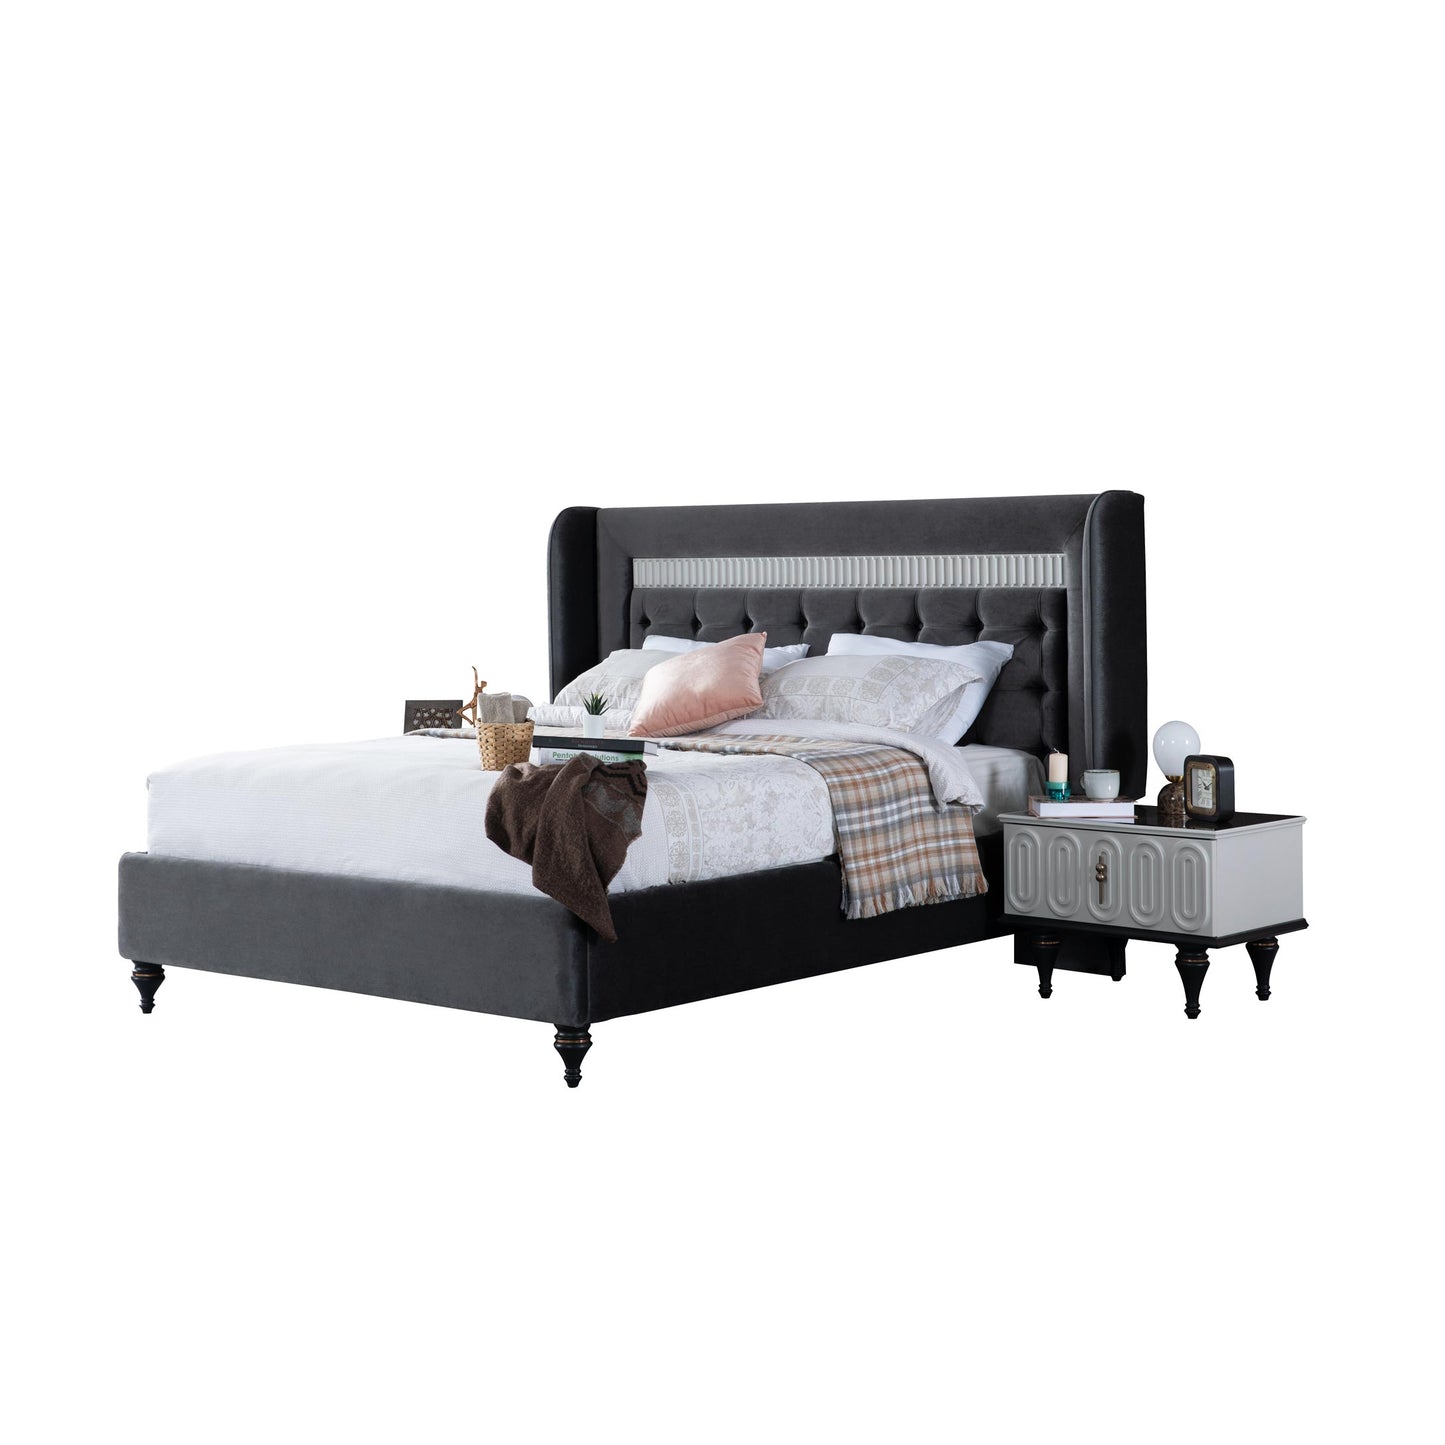 BELGRAD Bed - King Size